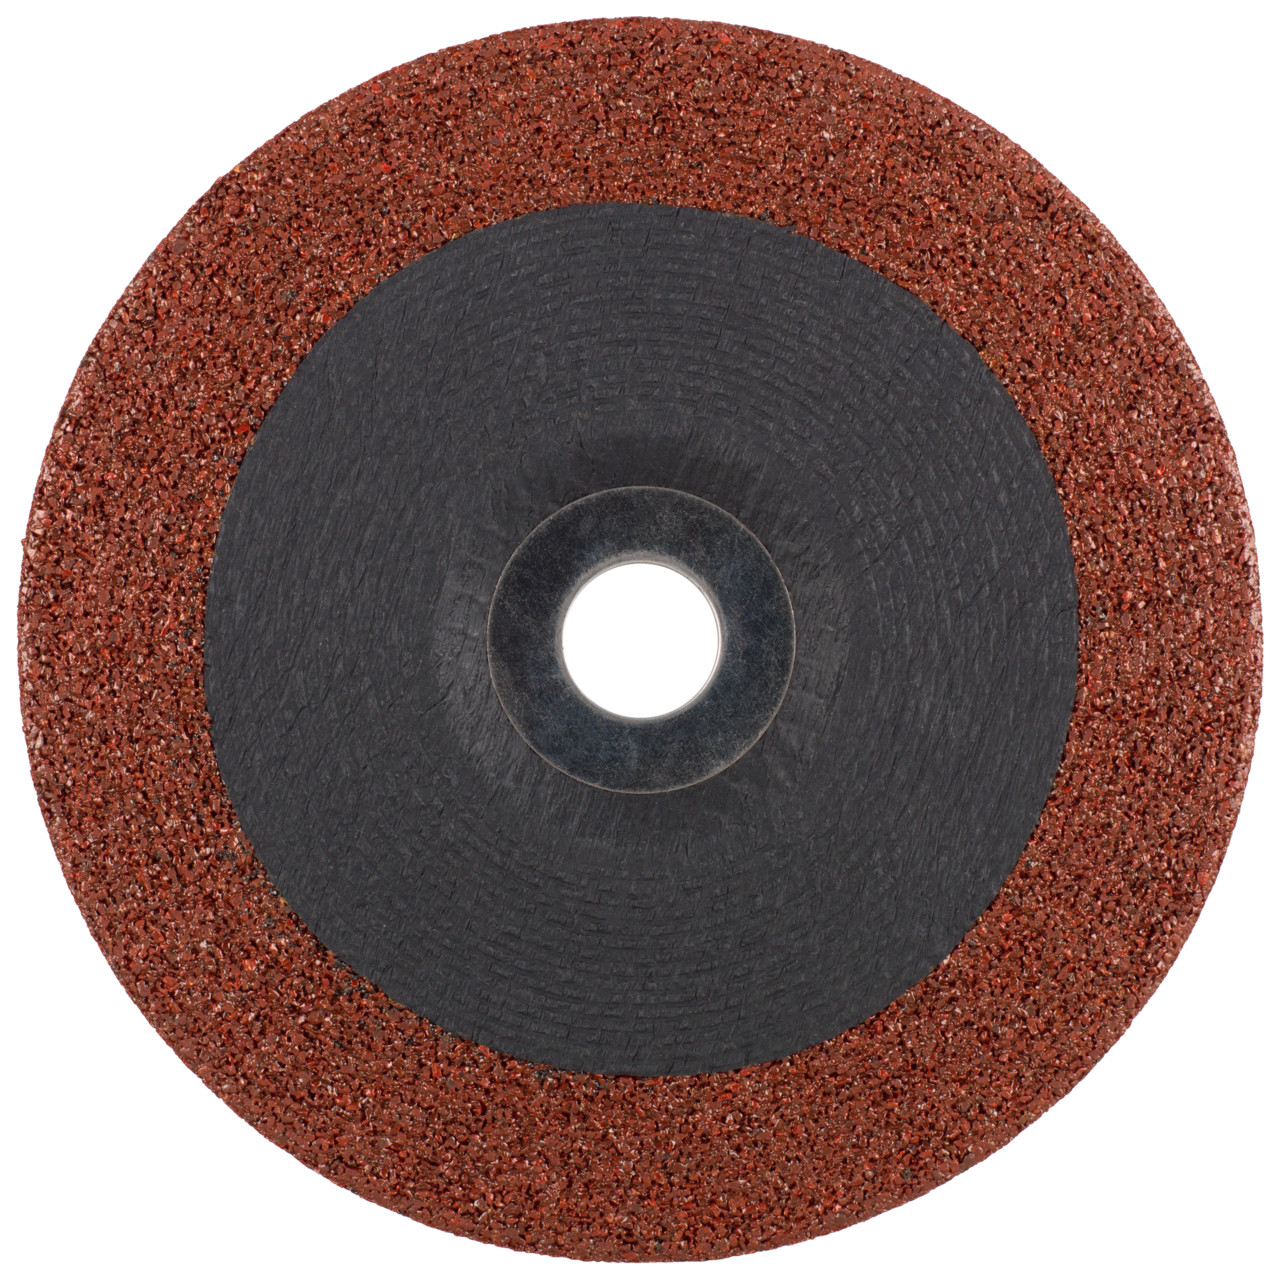 Disco Tyrolit DxUxH 115x7x22.23 3in1 per acciaio, acciaio inox e ghisa, forma: 27 - versione offset, Art. 466744